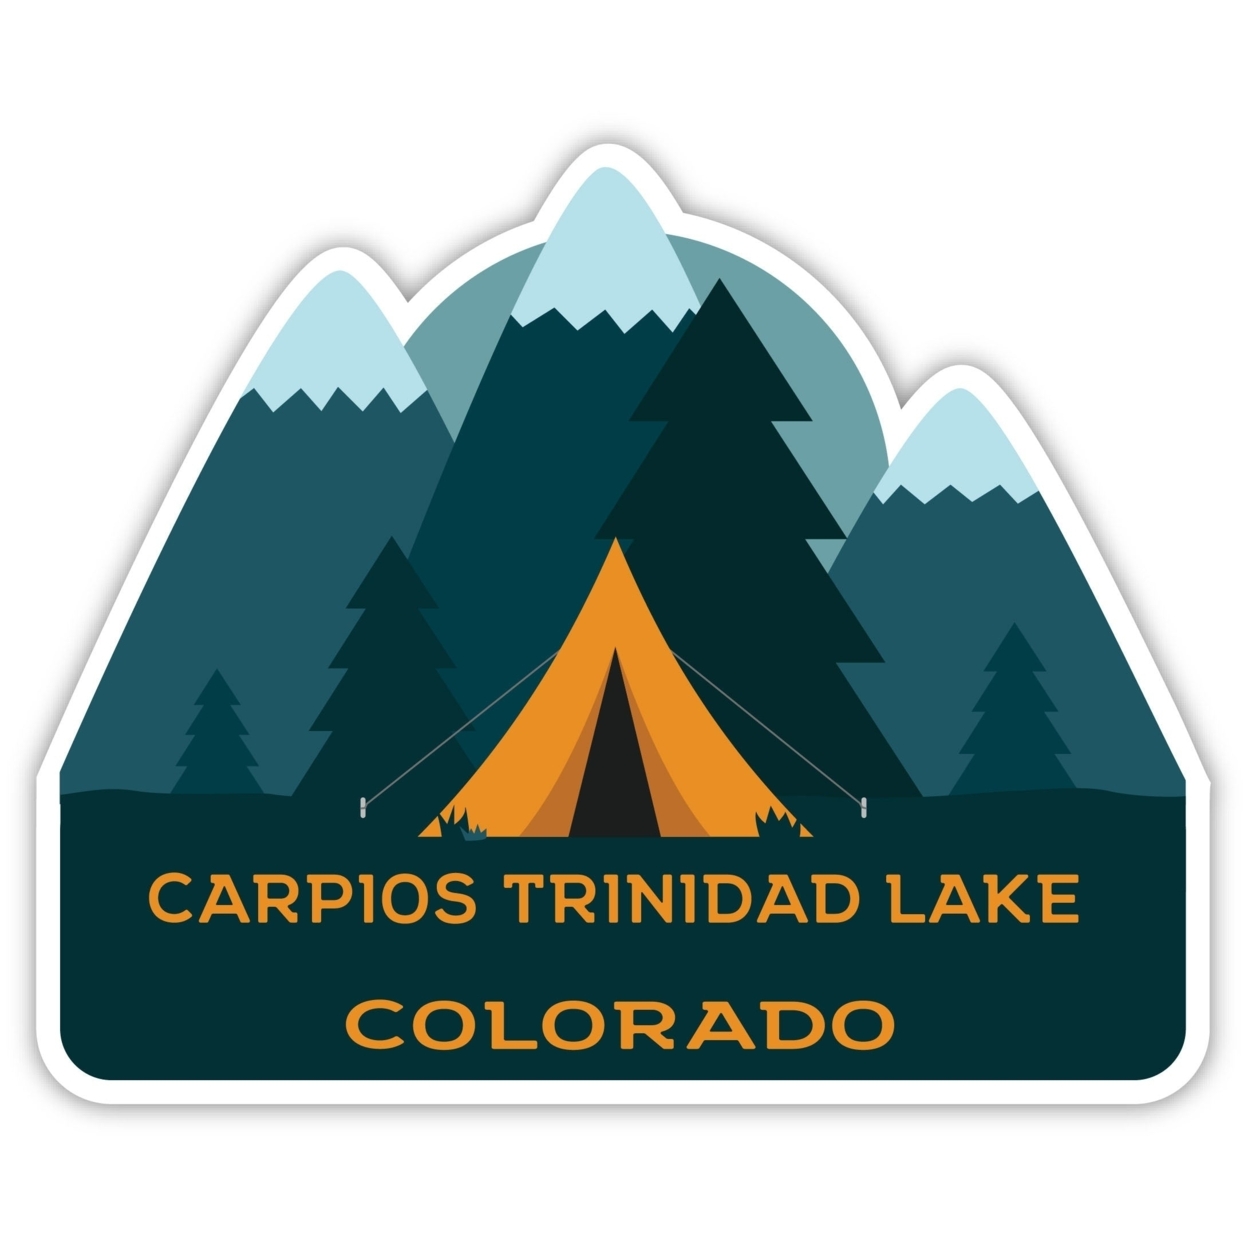 Carpios Trinidad Lake Colorado Souvenir Decorative Stickers (Choose Theme And Size) - Single Unit, 6-Inch, Tent